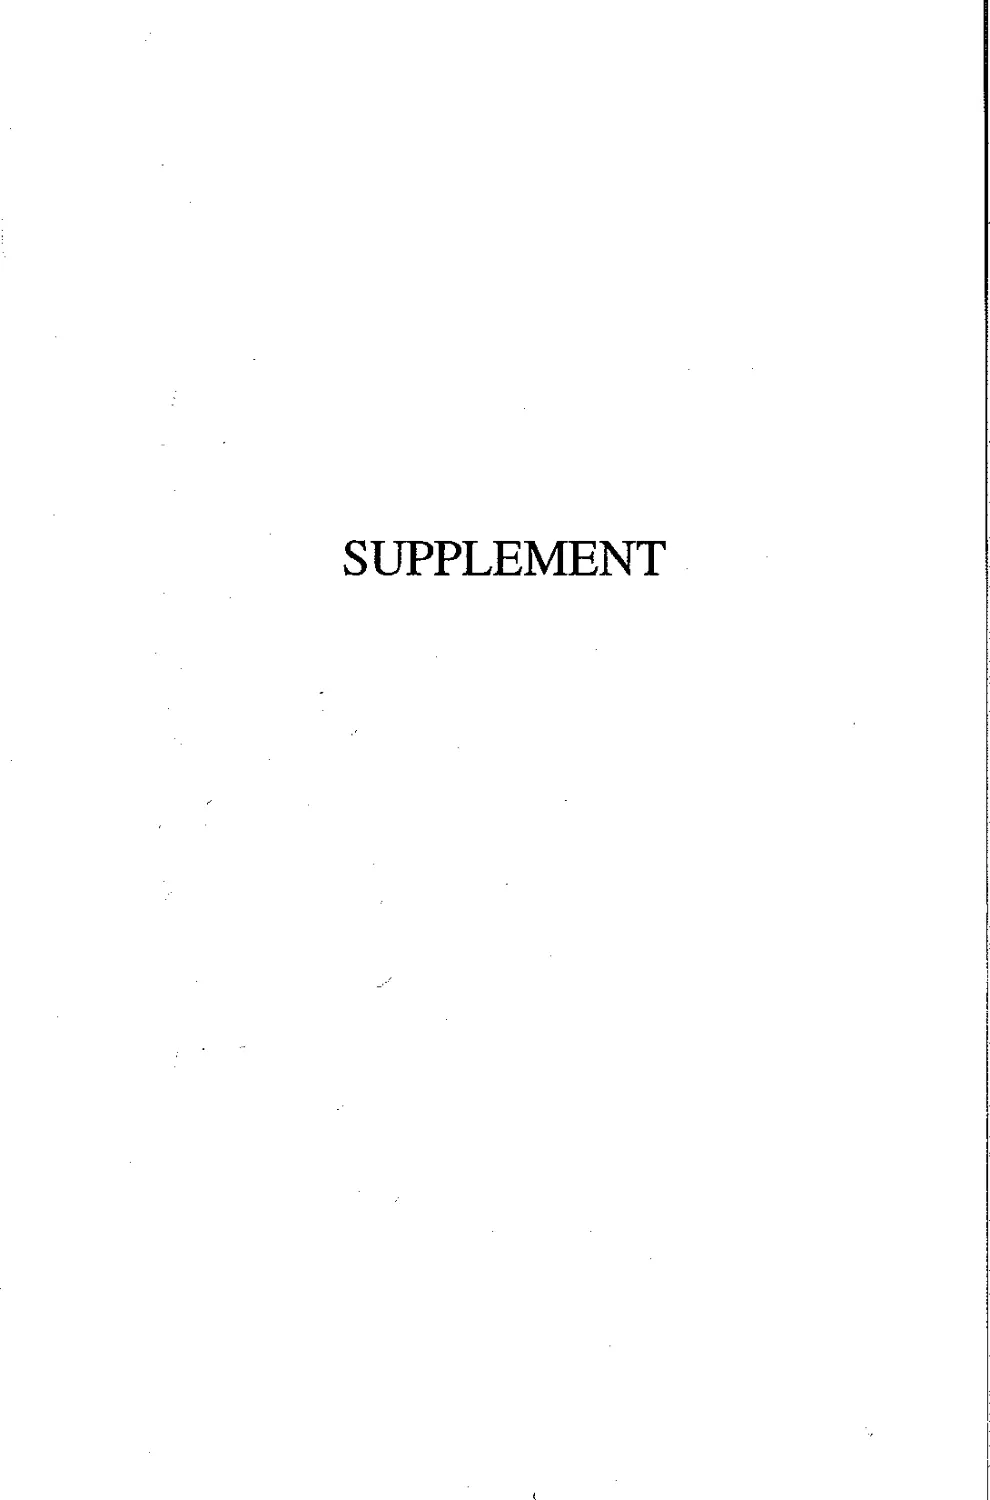 Supplement